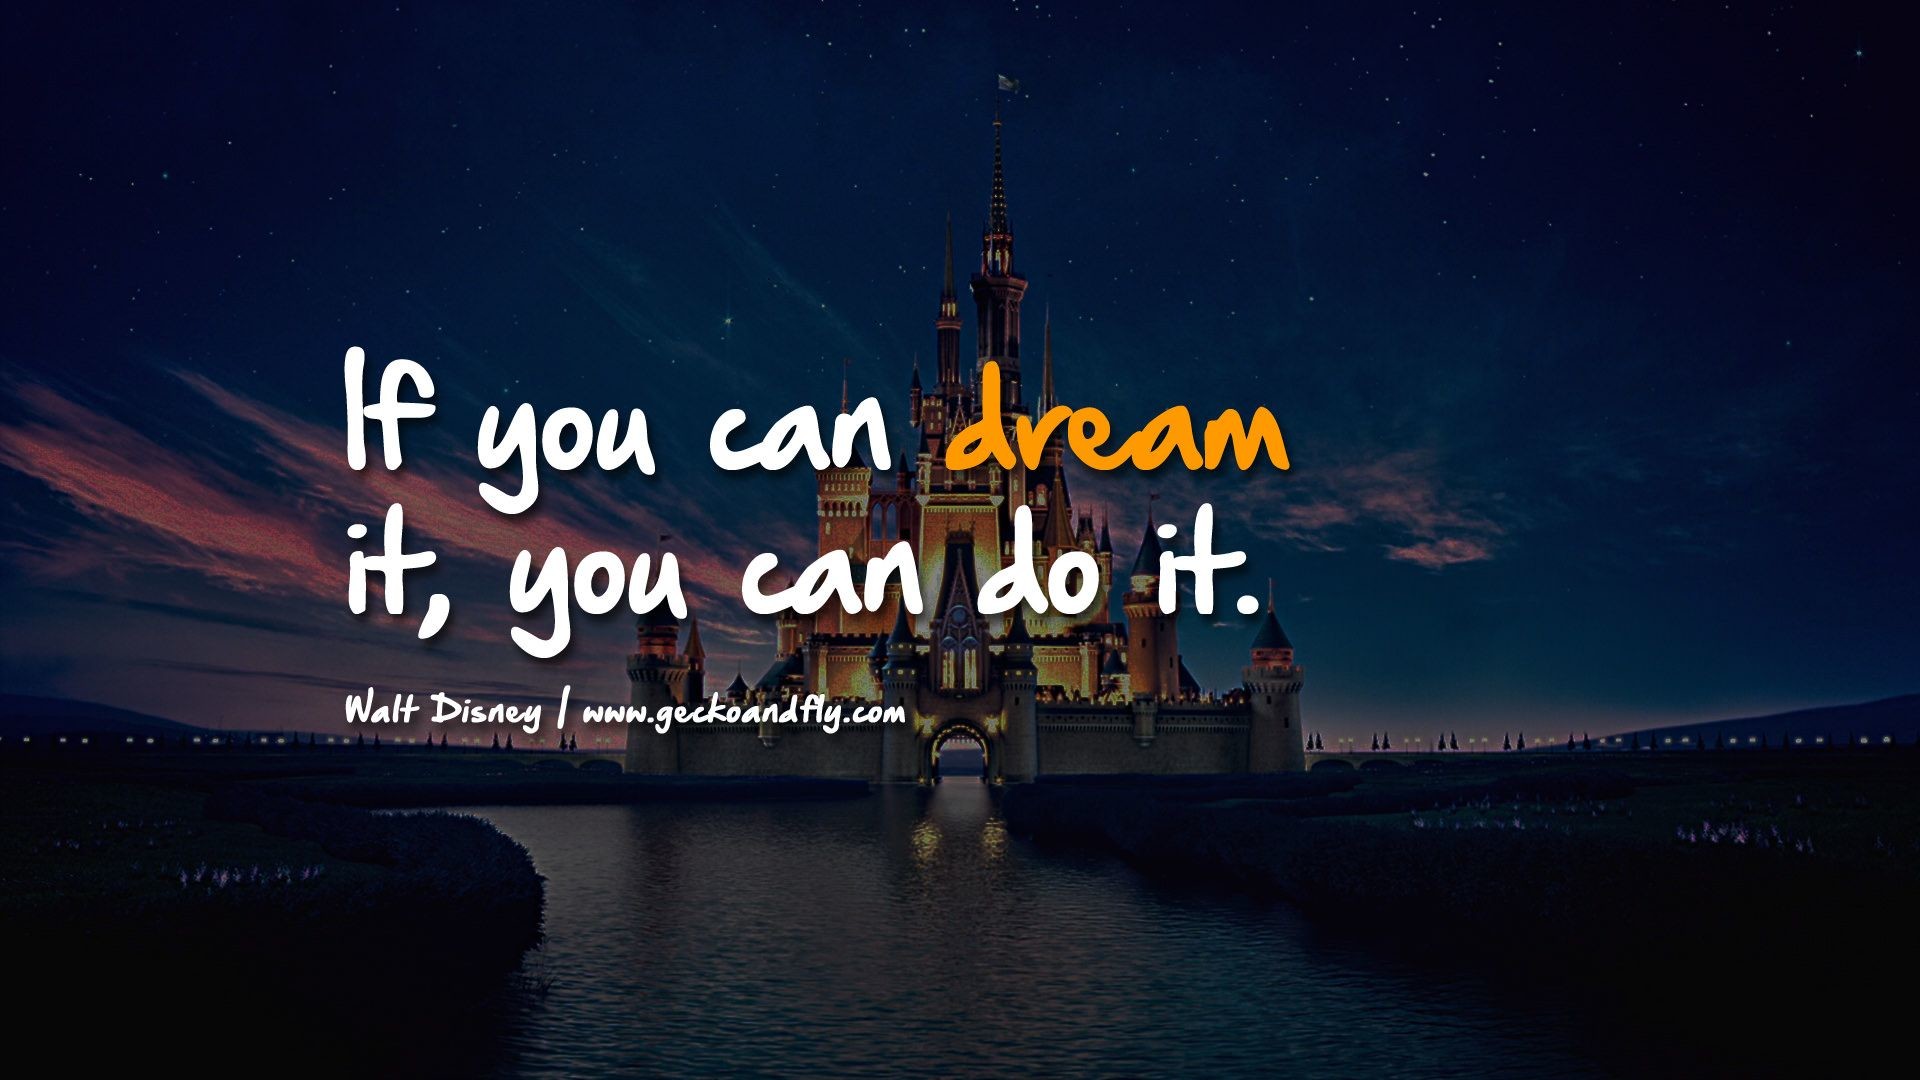 Disney Quotes Desktop Wallpaper Quotesgram. Download